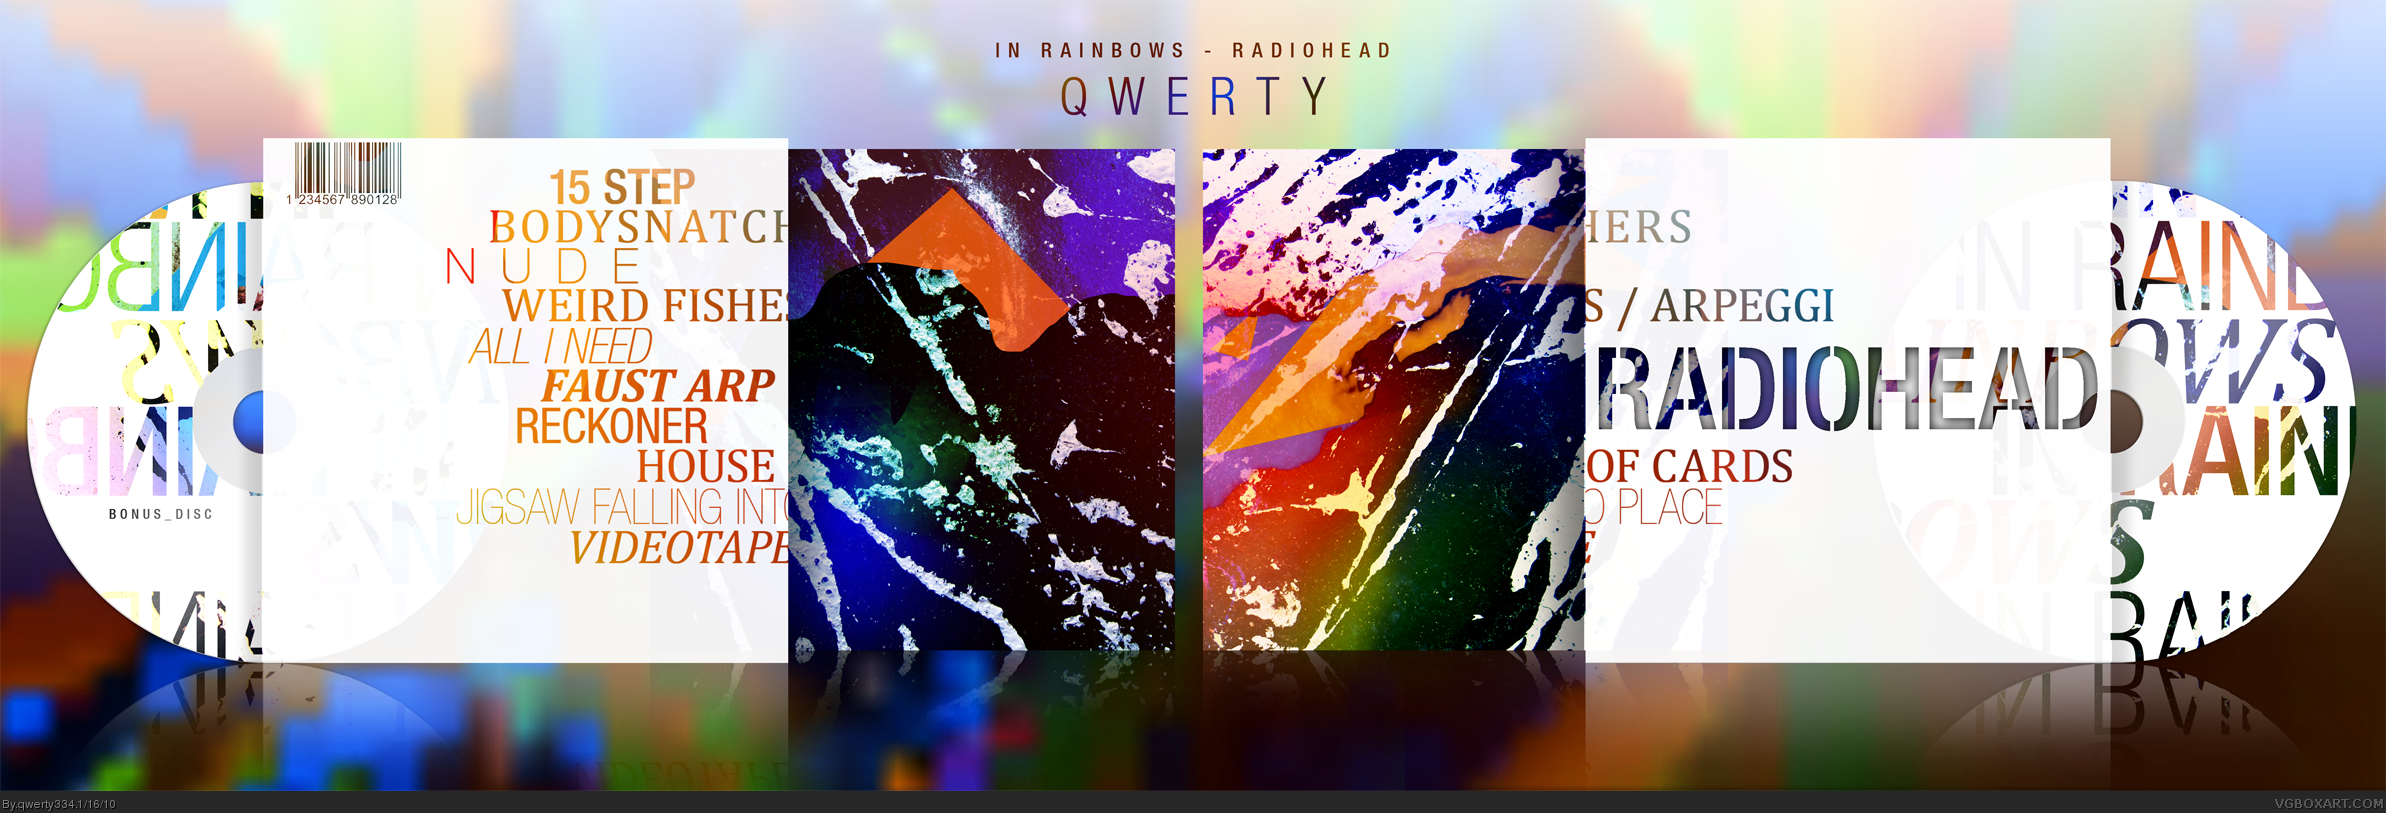 Radiohead: In Rainbows box cover